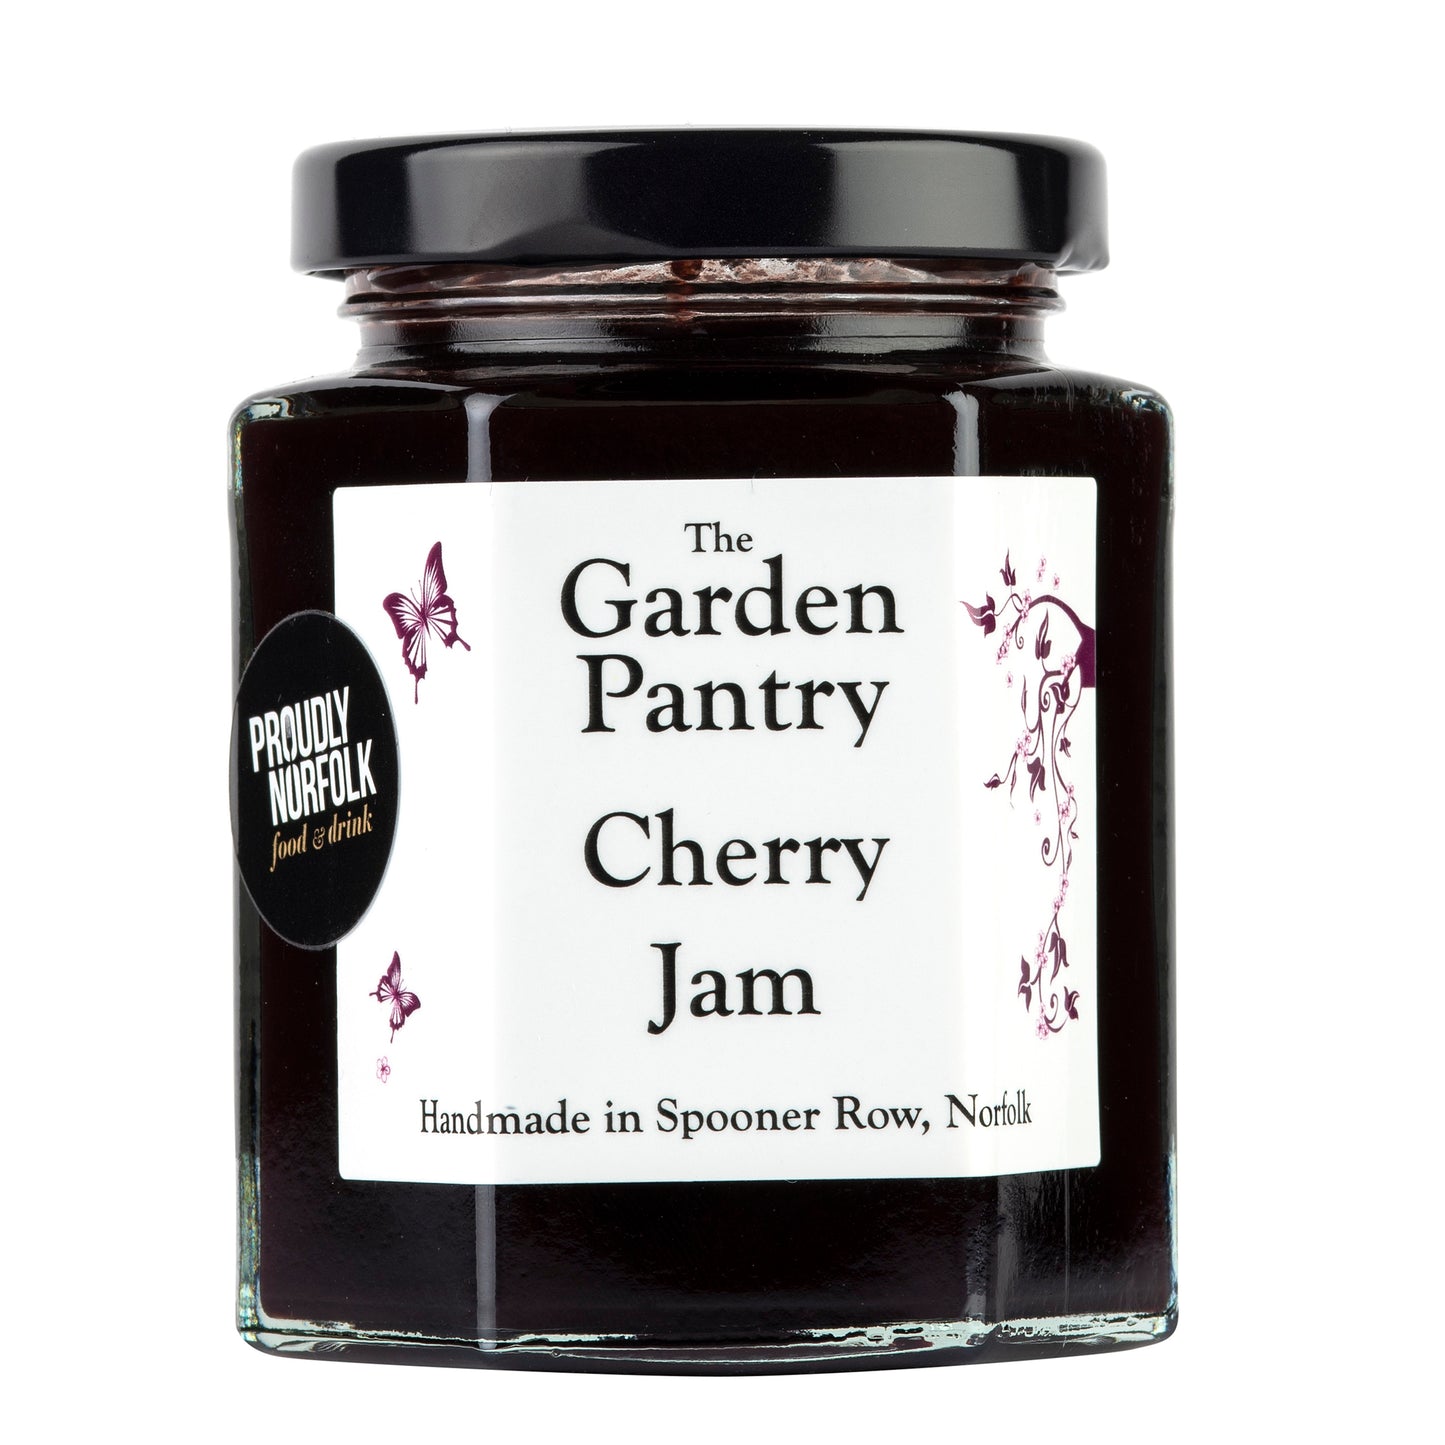 The Garden Pantry Cherry Jam